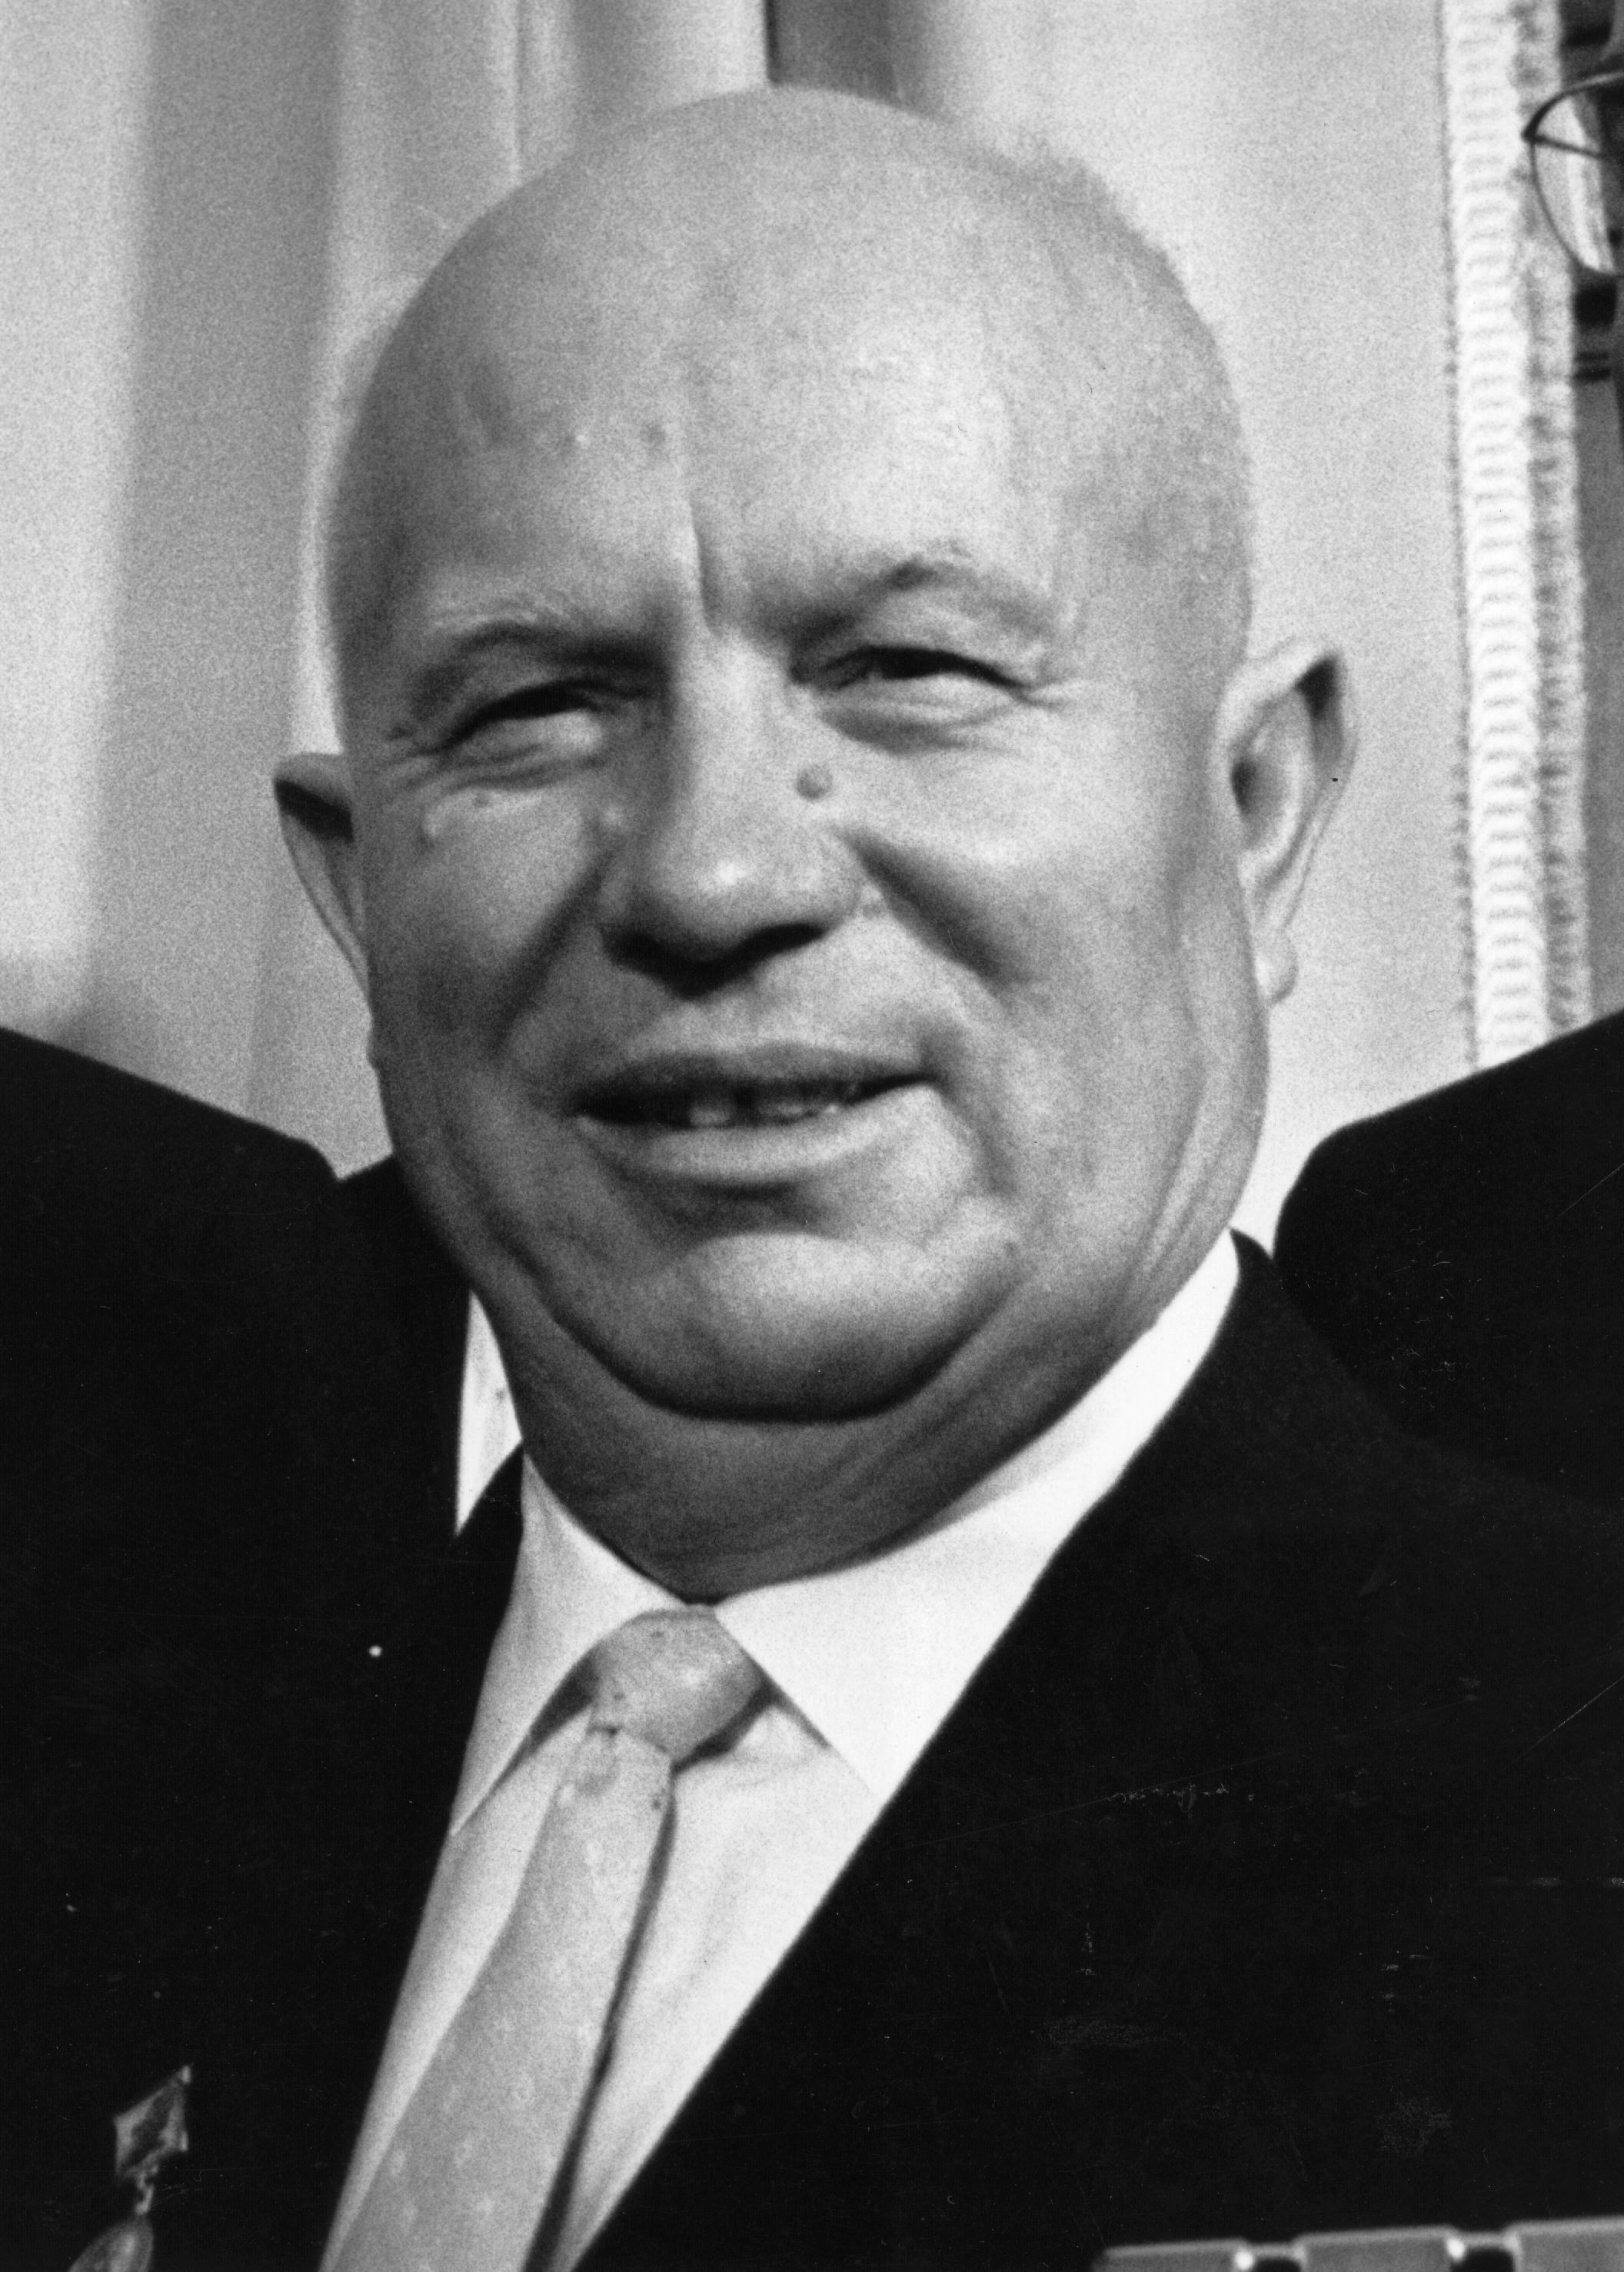 Khruschev